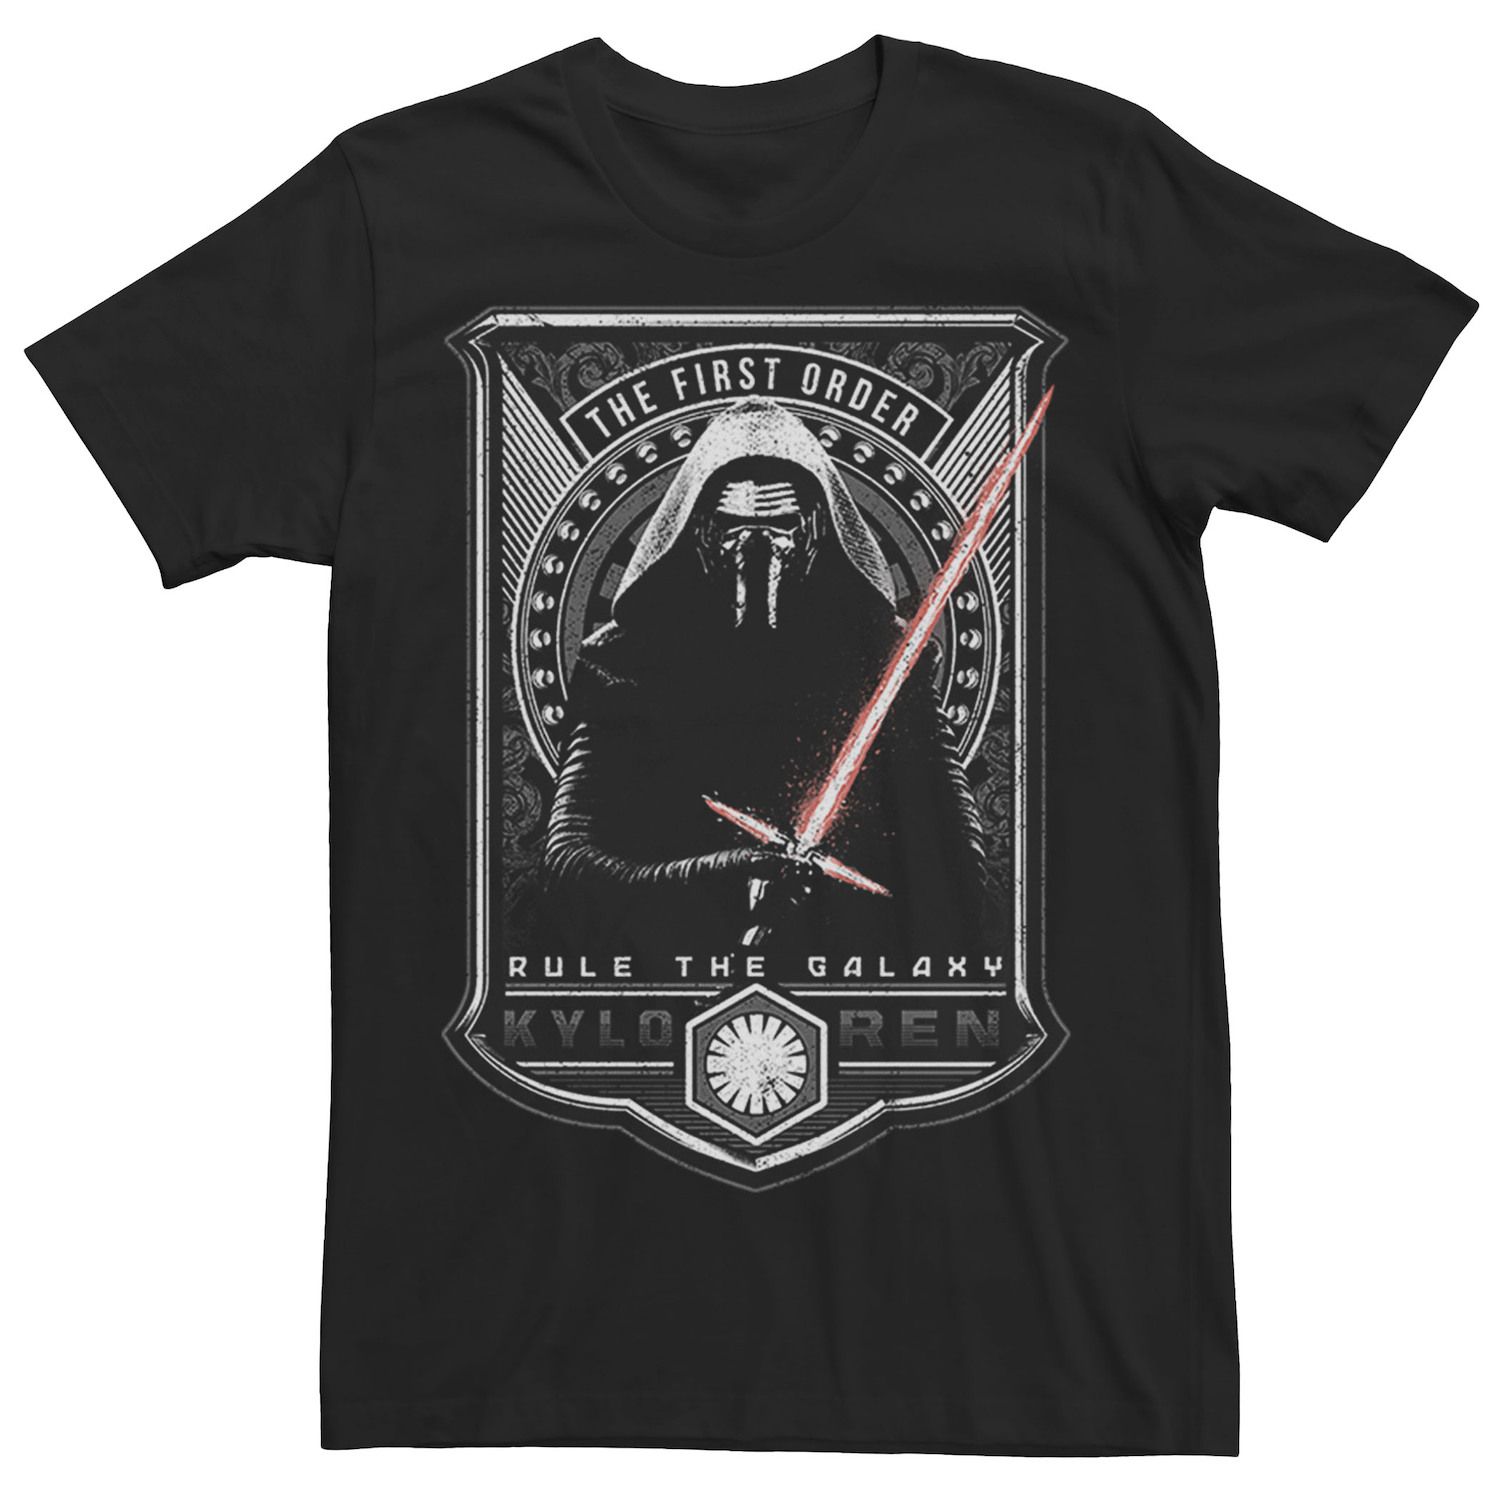 Мужская футболка Kylo Ren The First Order Star Wars цена и фото